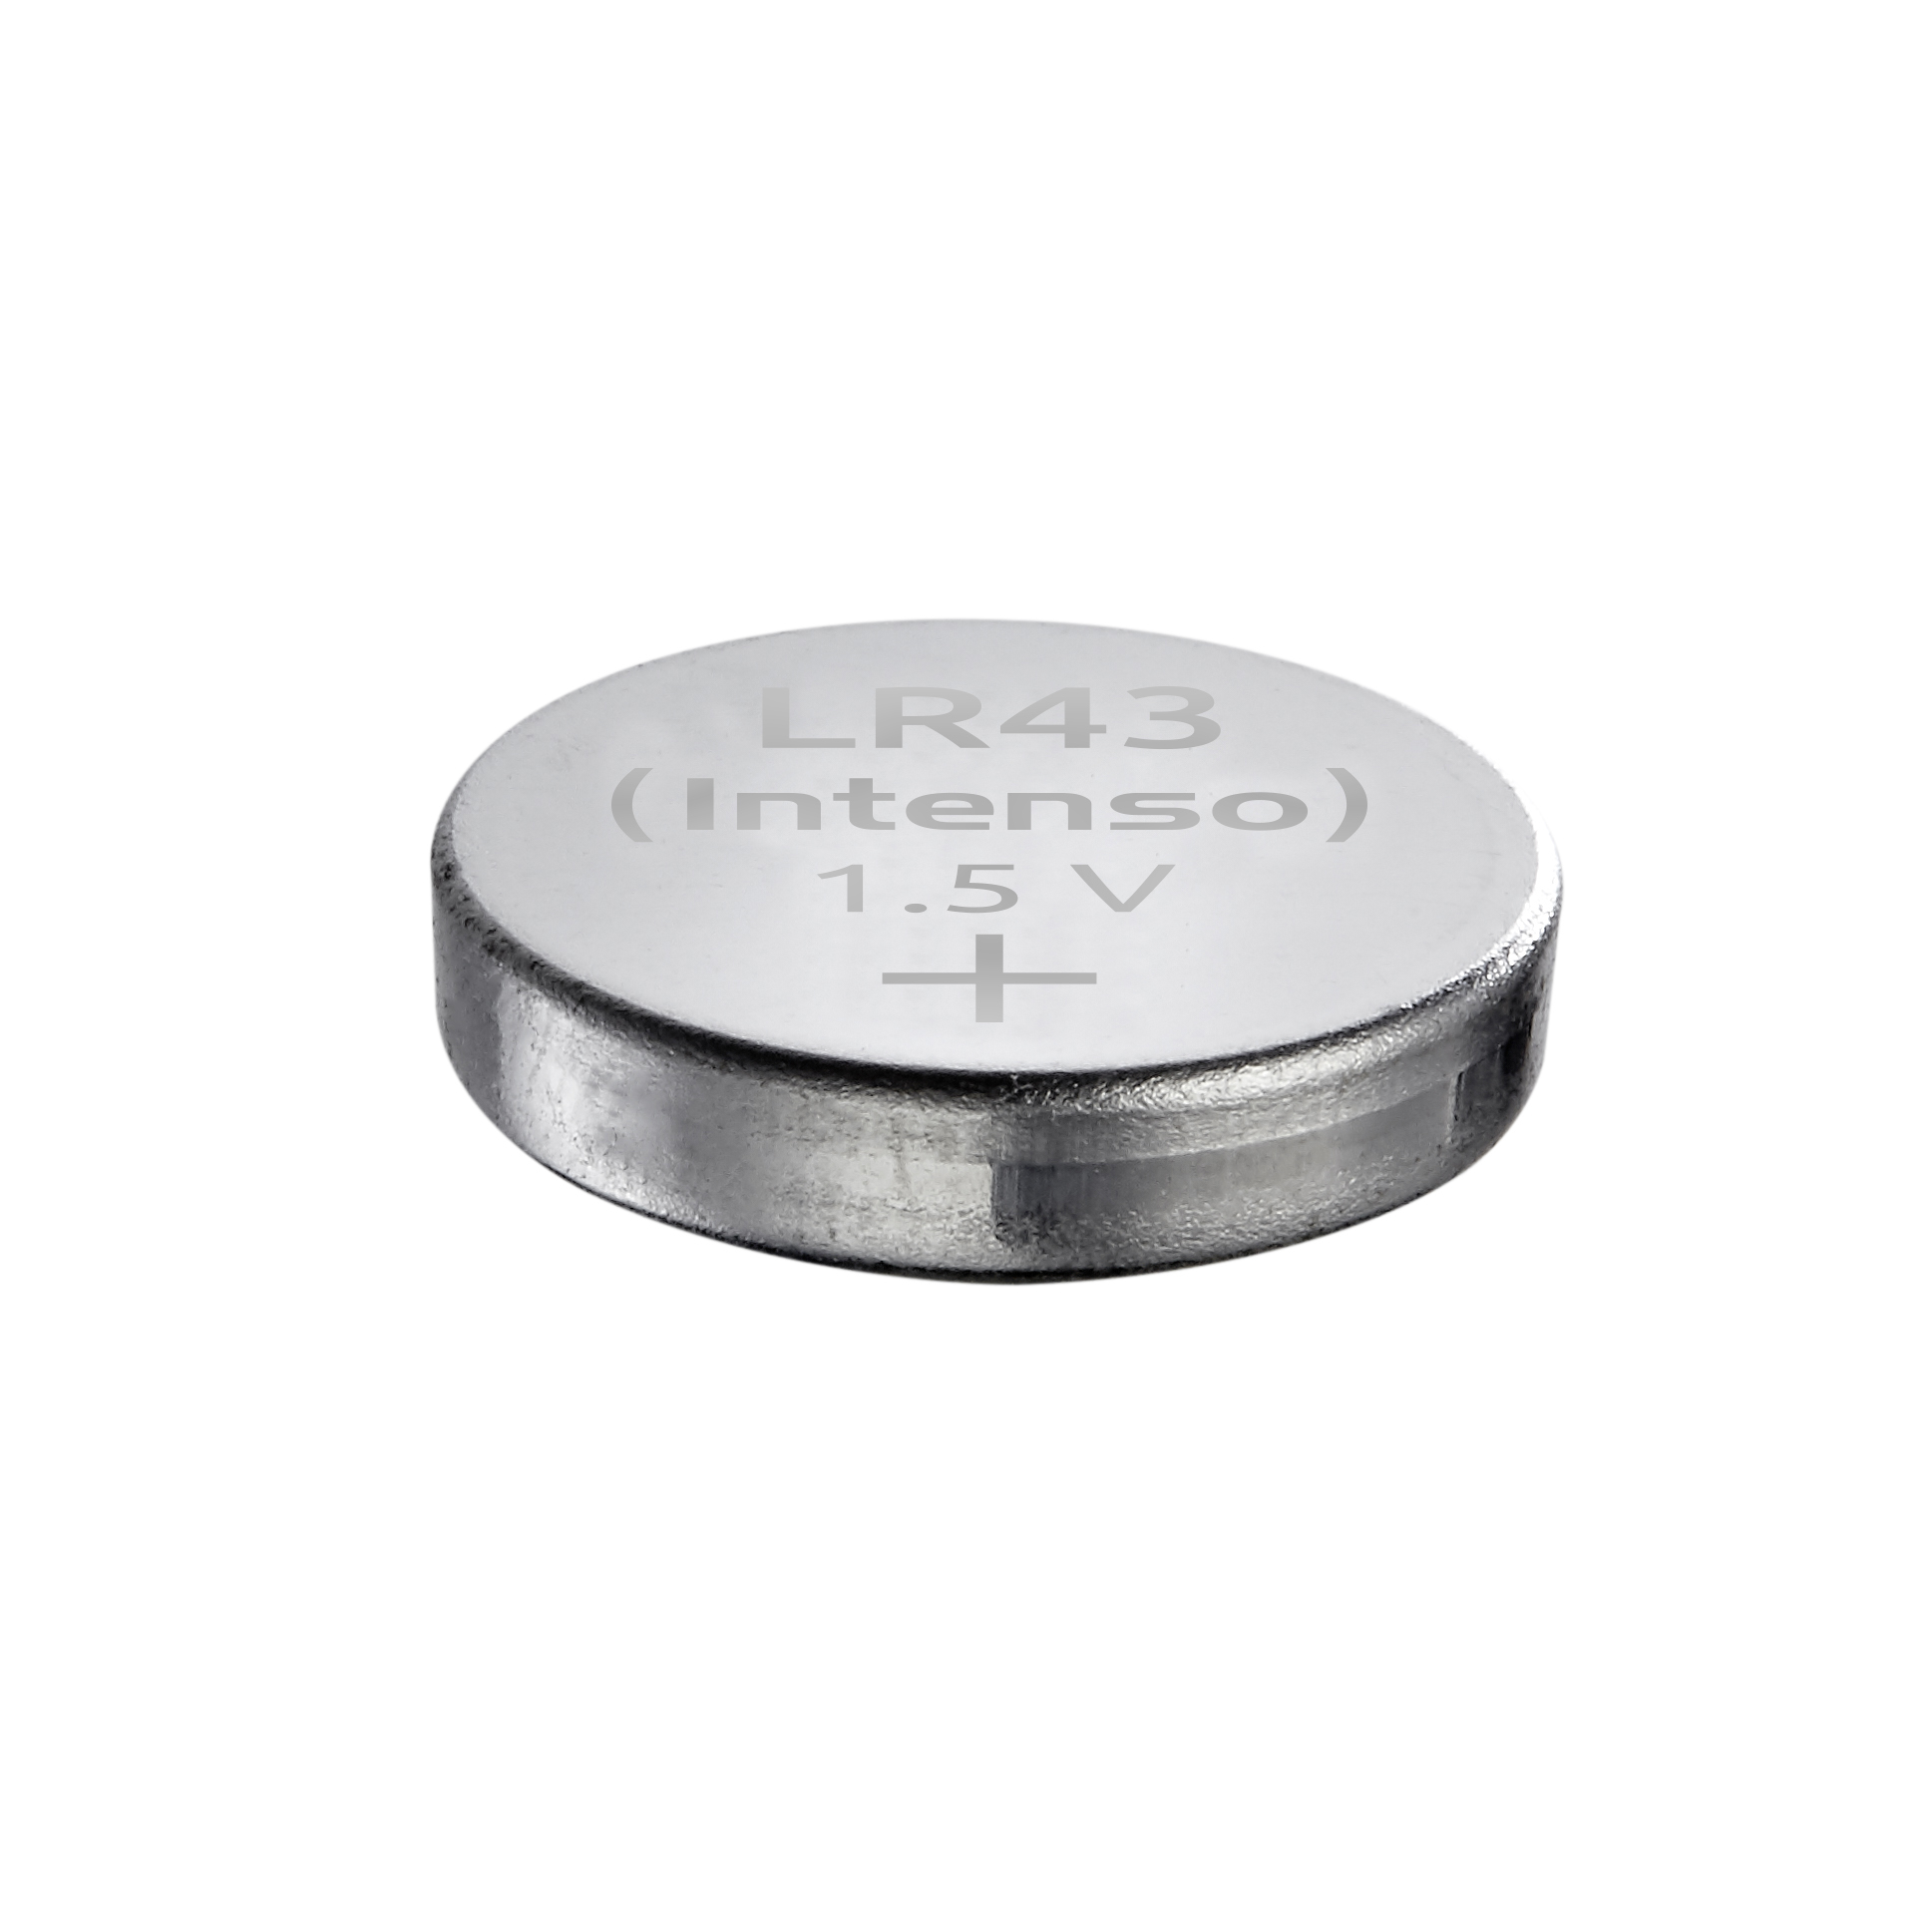 INTENSO Energy Ultra LR43 Pack Quecksilber, Batterie 2er von Blei) (frei Knopfzelle Cadmium, LR43 Alkaline